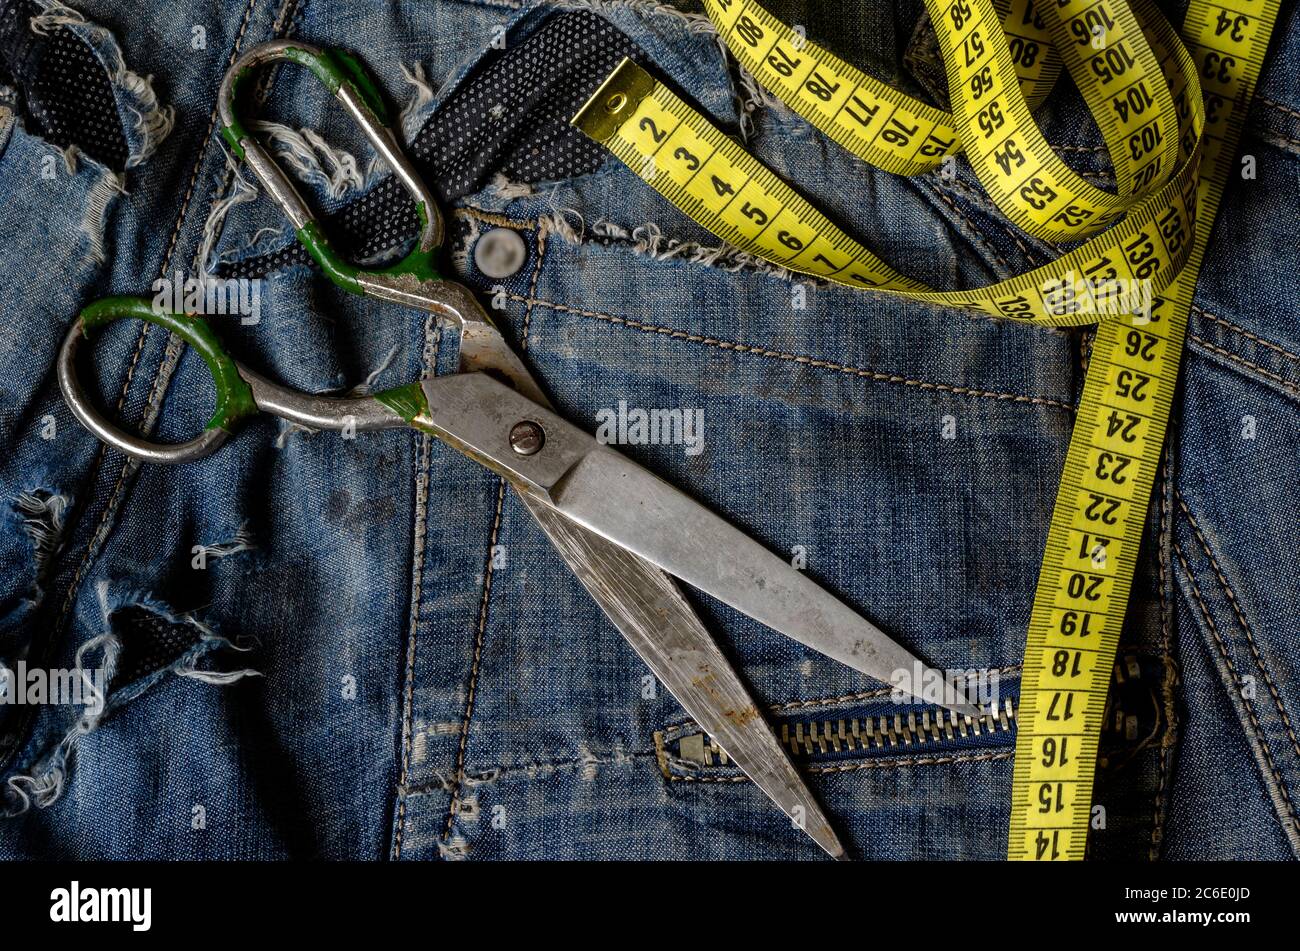 https://c8.alamy.com/comp/2C6E0JD/tailoring-and-design-concept-metal-scissors-ruler-and-yellow-measure-tape-in-denim-pants-pockets-2C6E0JD.jpg